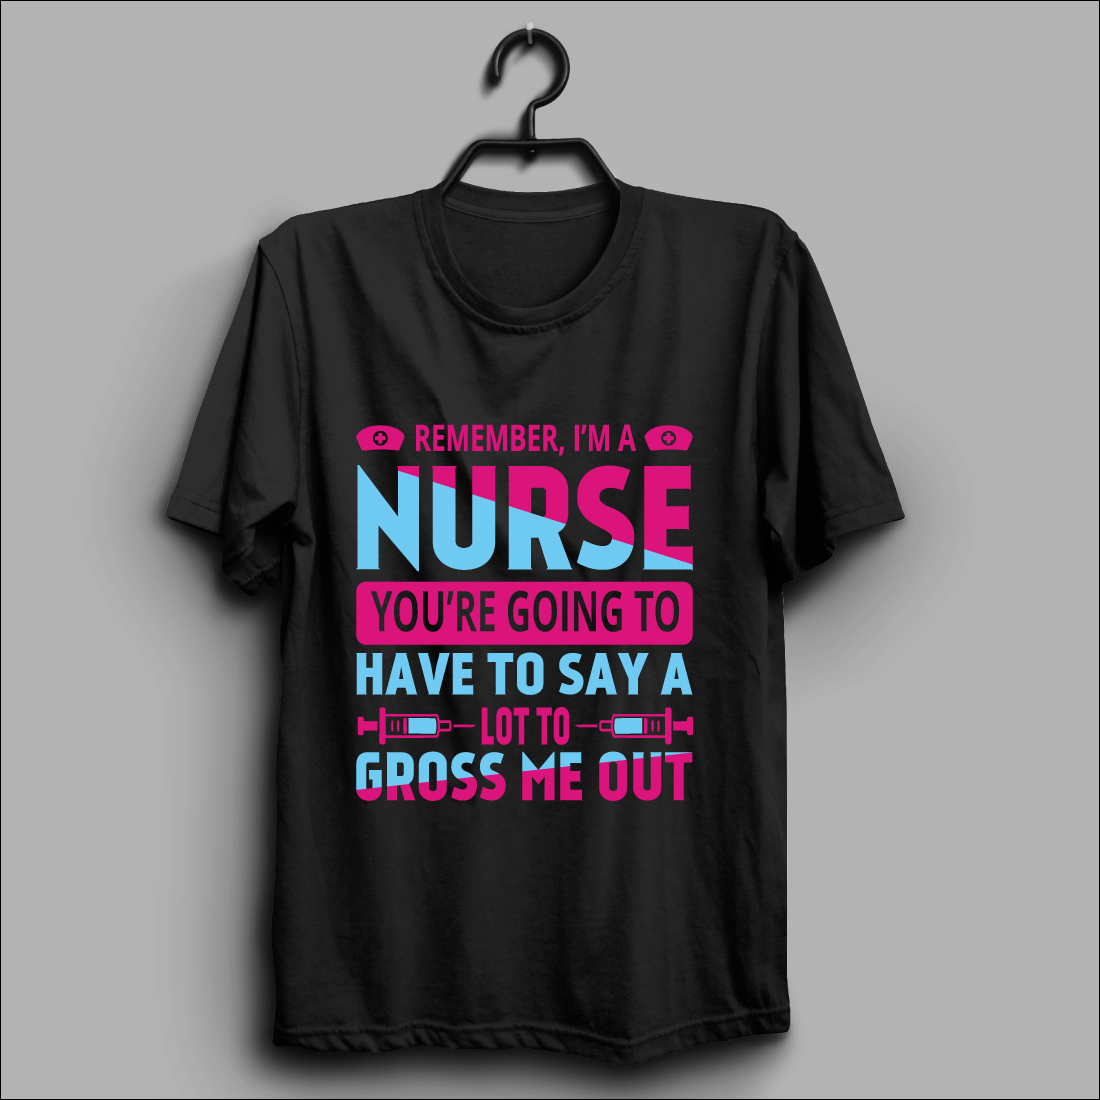 nurse t shirt design2 395